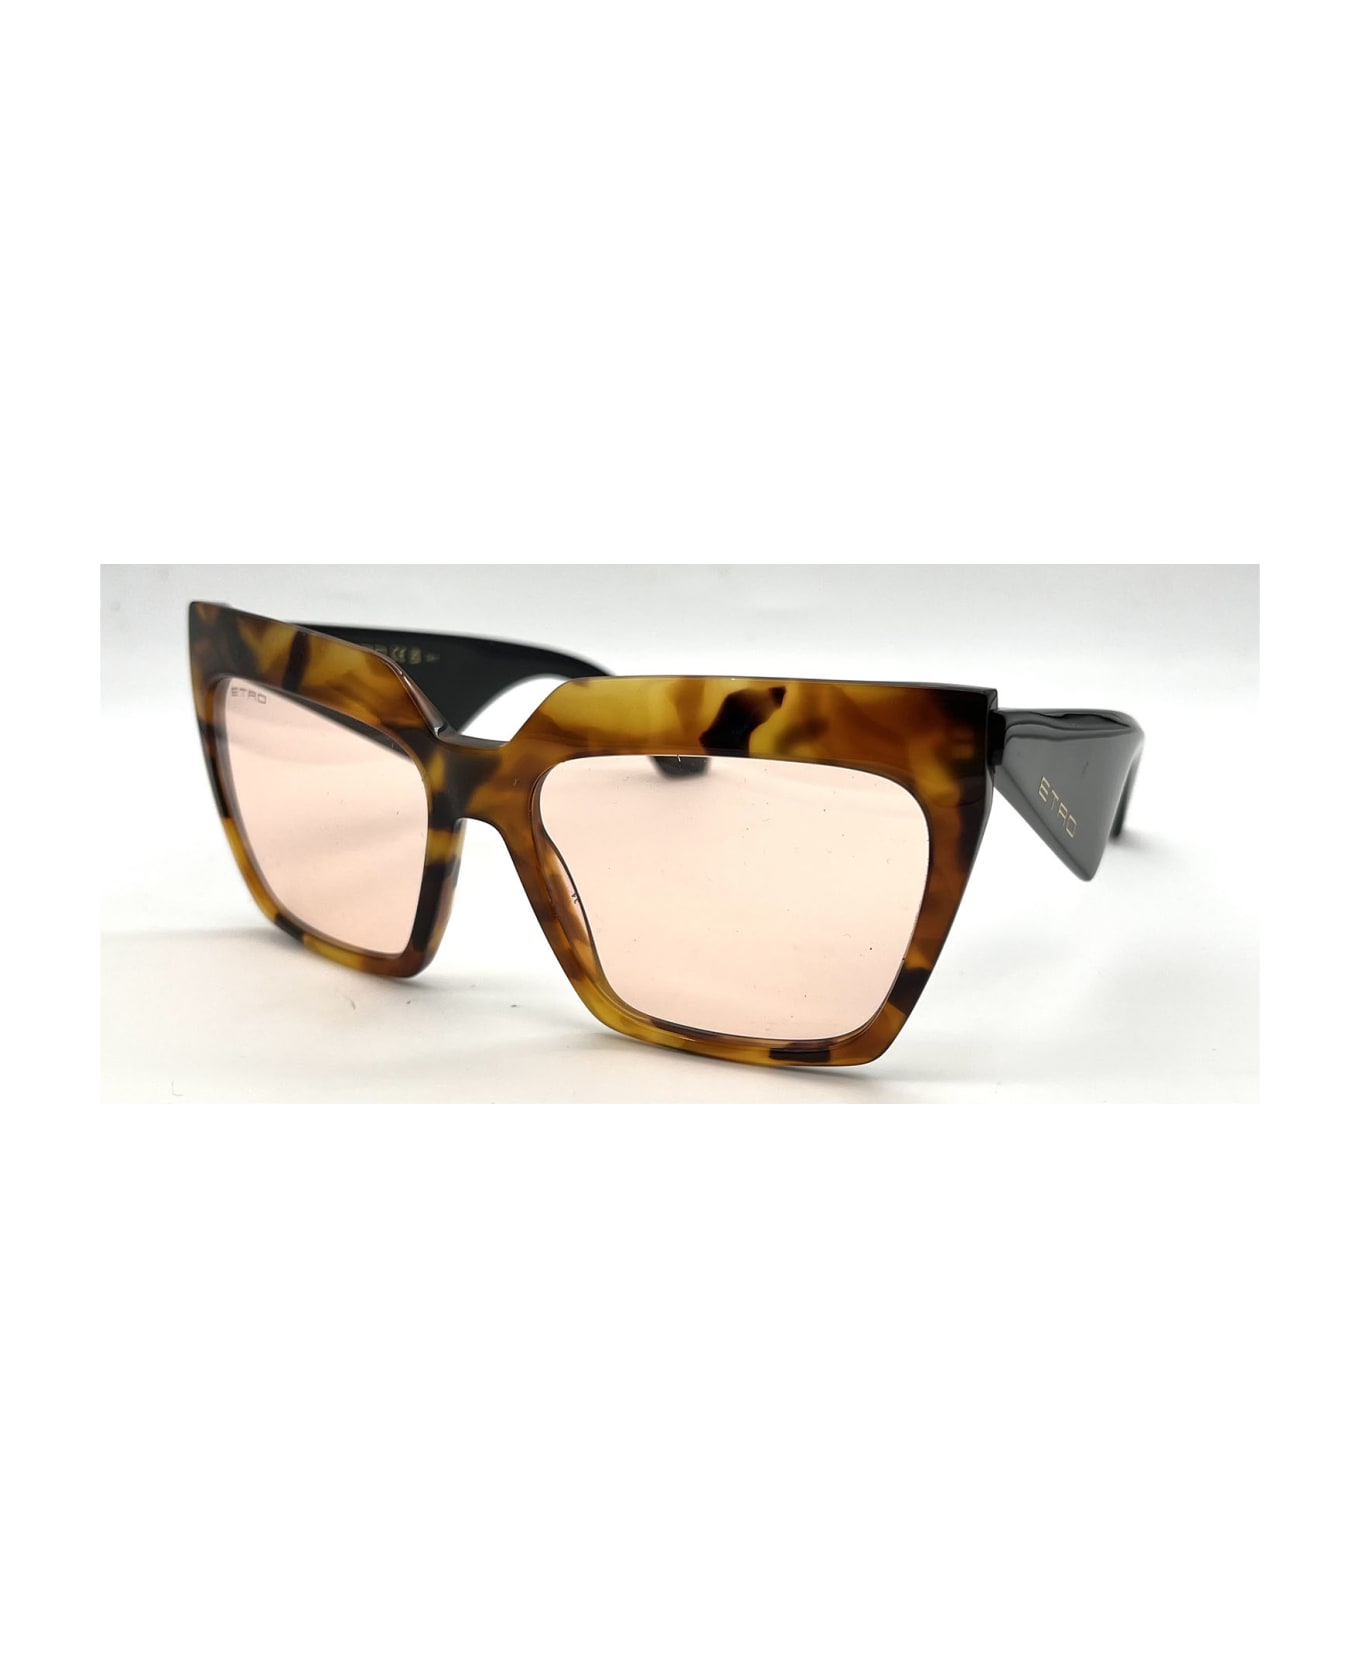 Etro 0001/S Sunglasses - Havana Honey